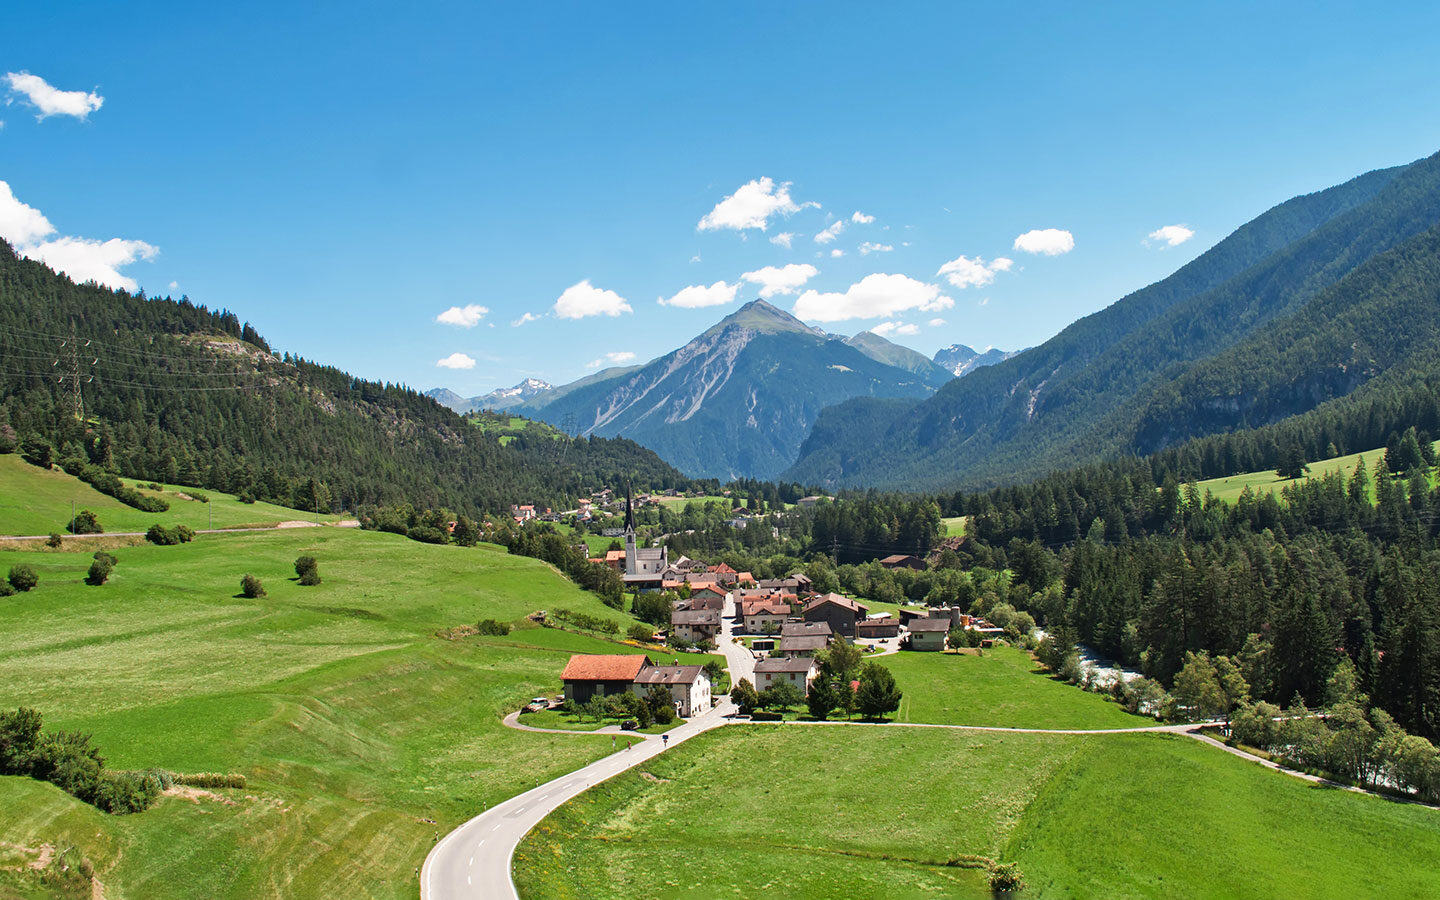 Views along the Bernina Express route